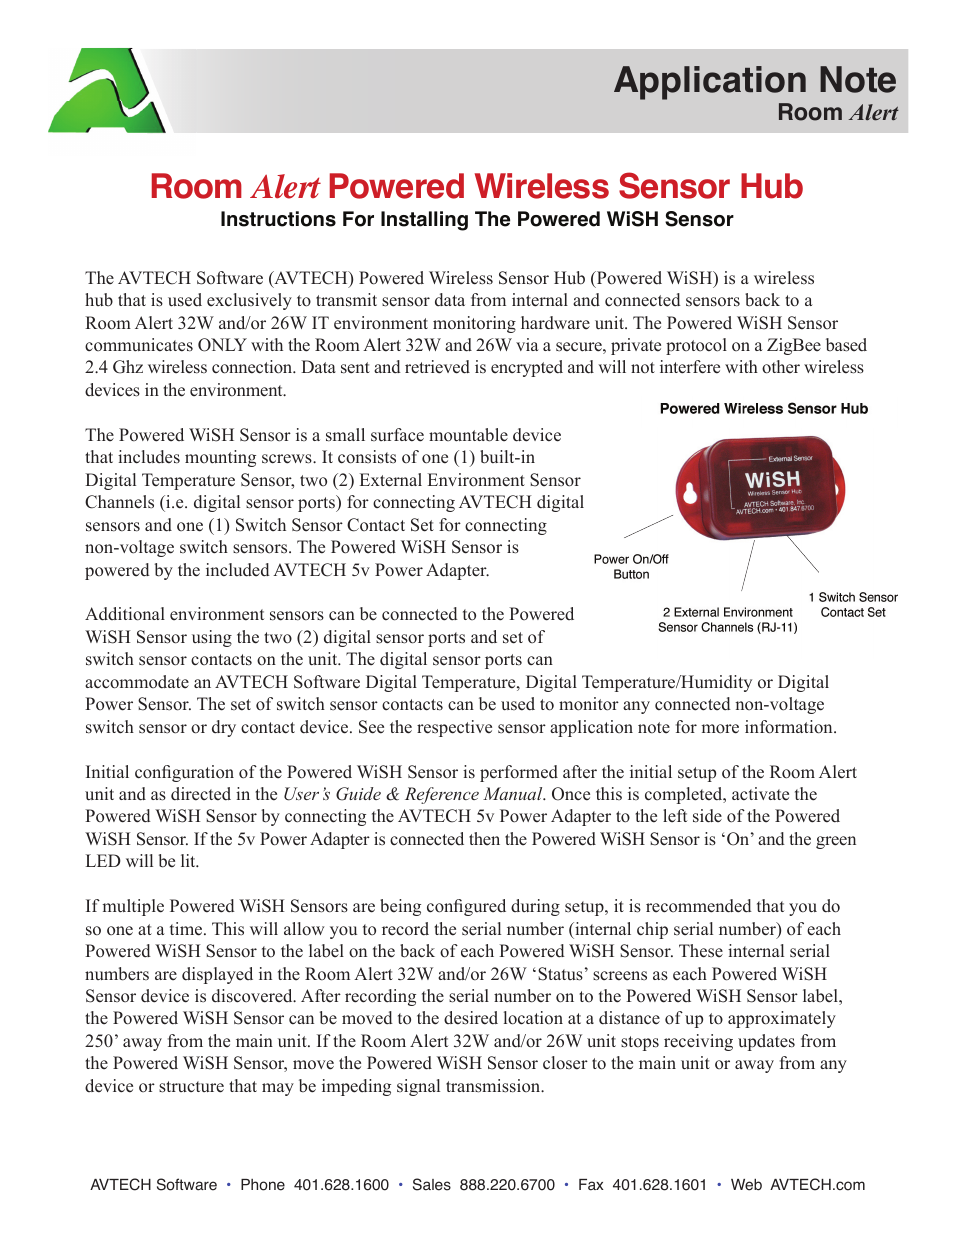 Wireless Sensor Hub (RAW-PWSH-HUB)